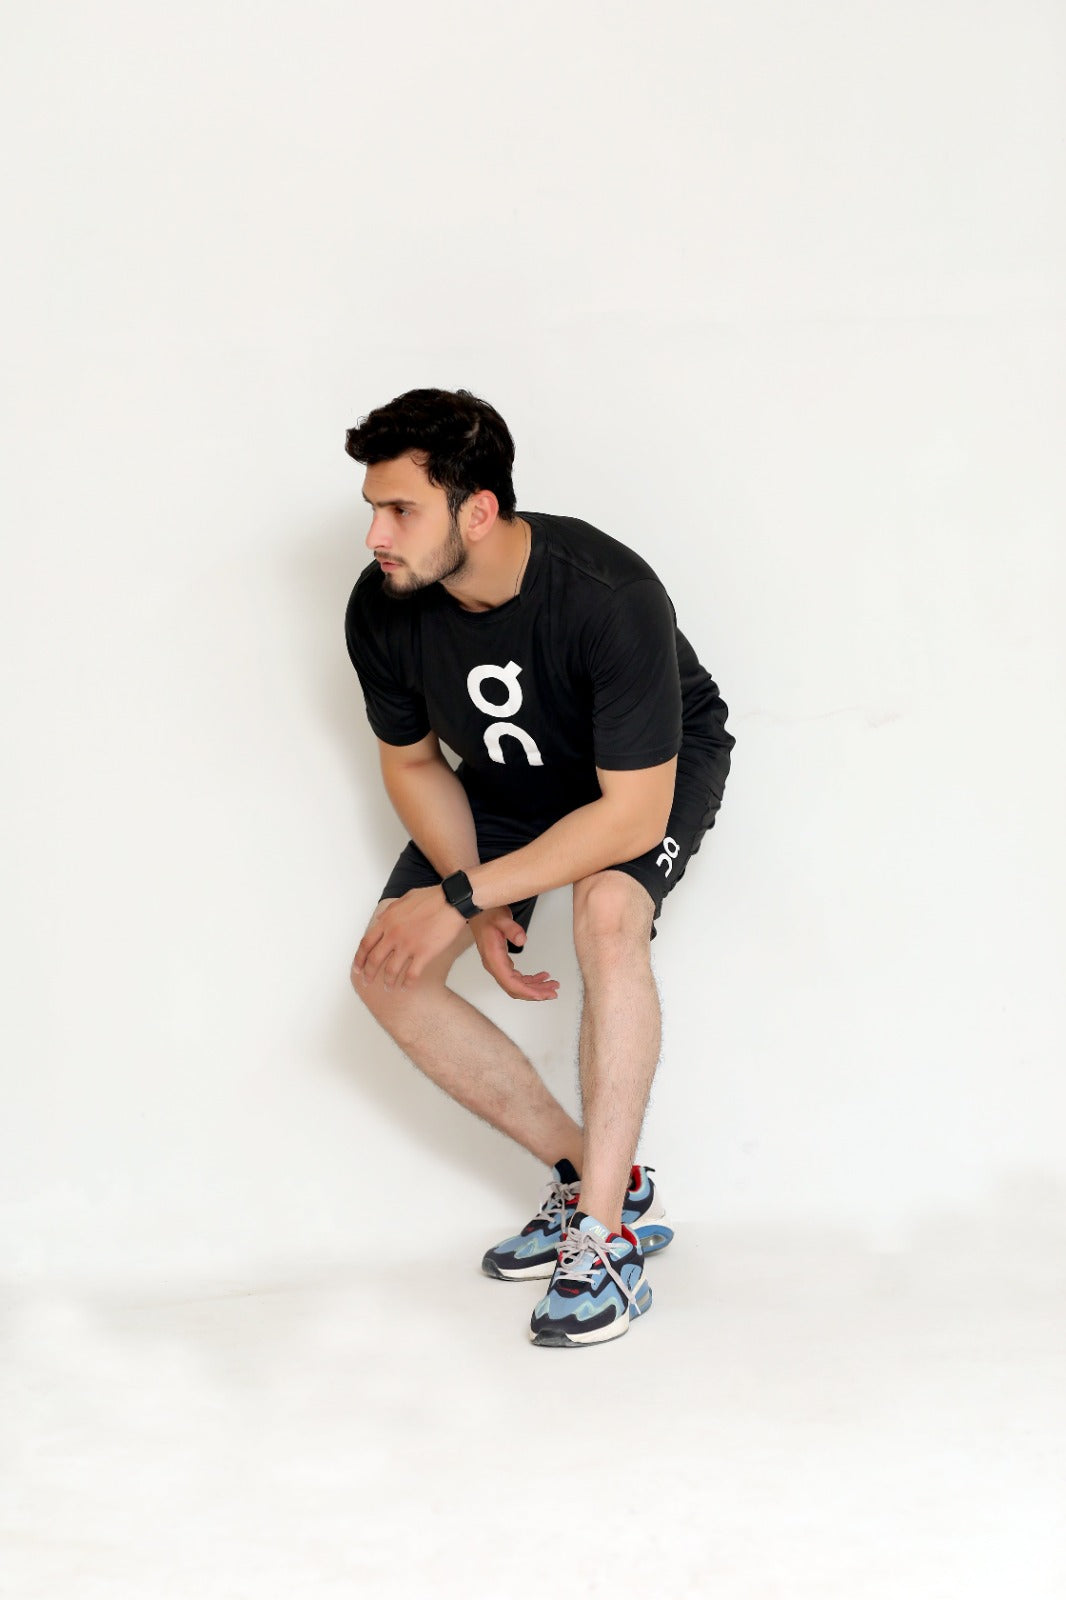 OnRun Activewear T-shirt & Shorts set For Men-MTRK-2241-Black